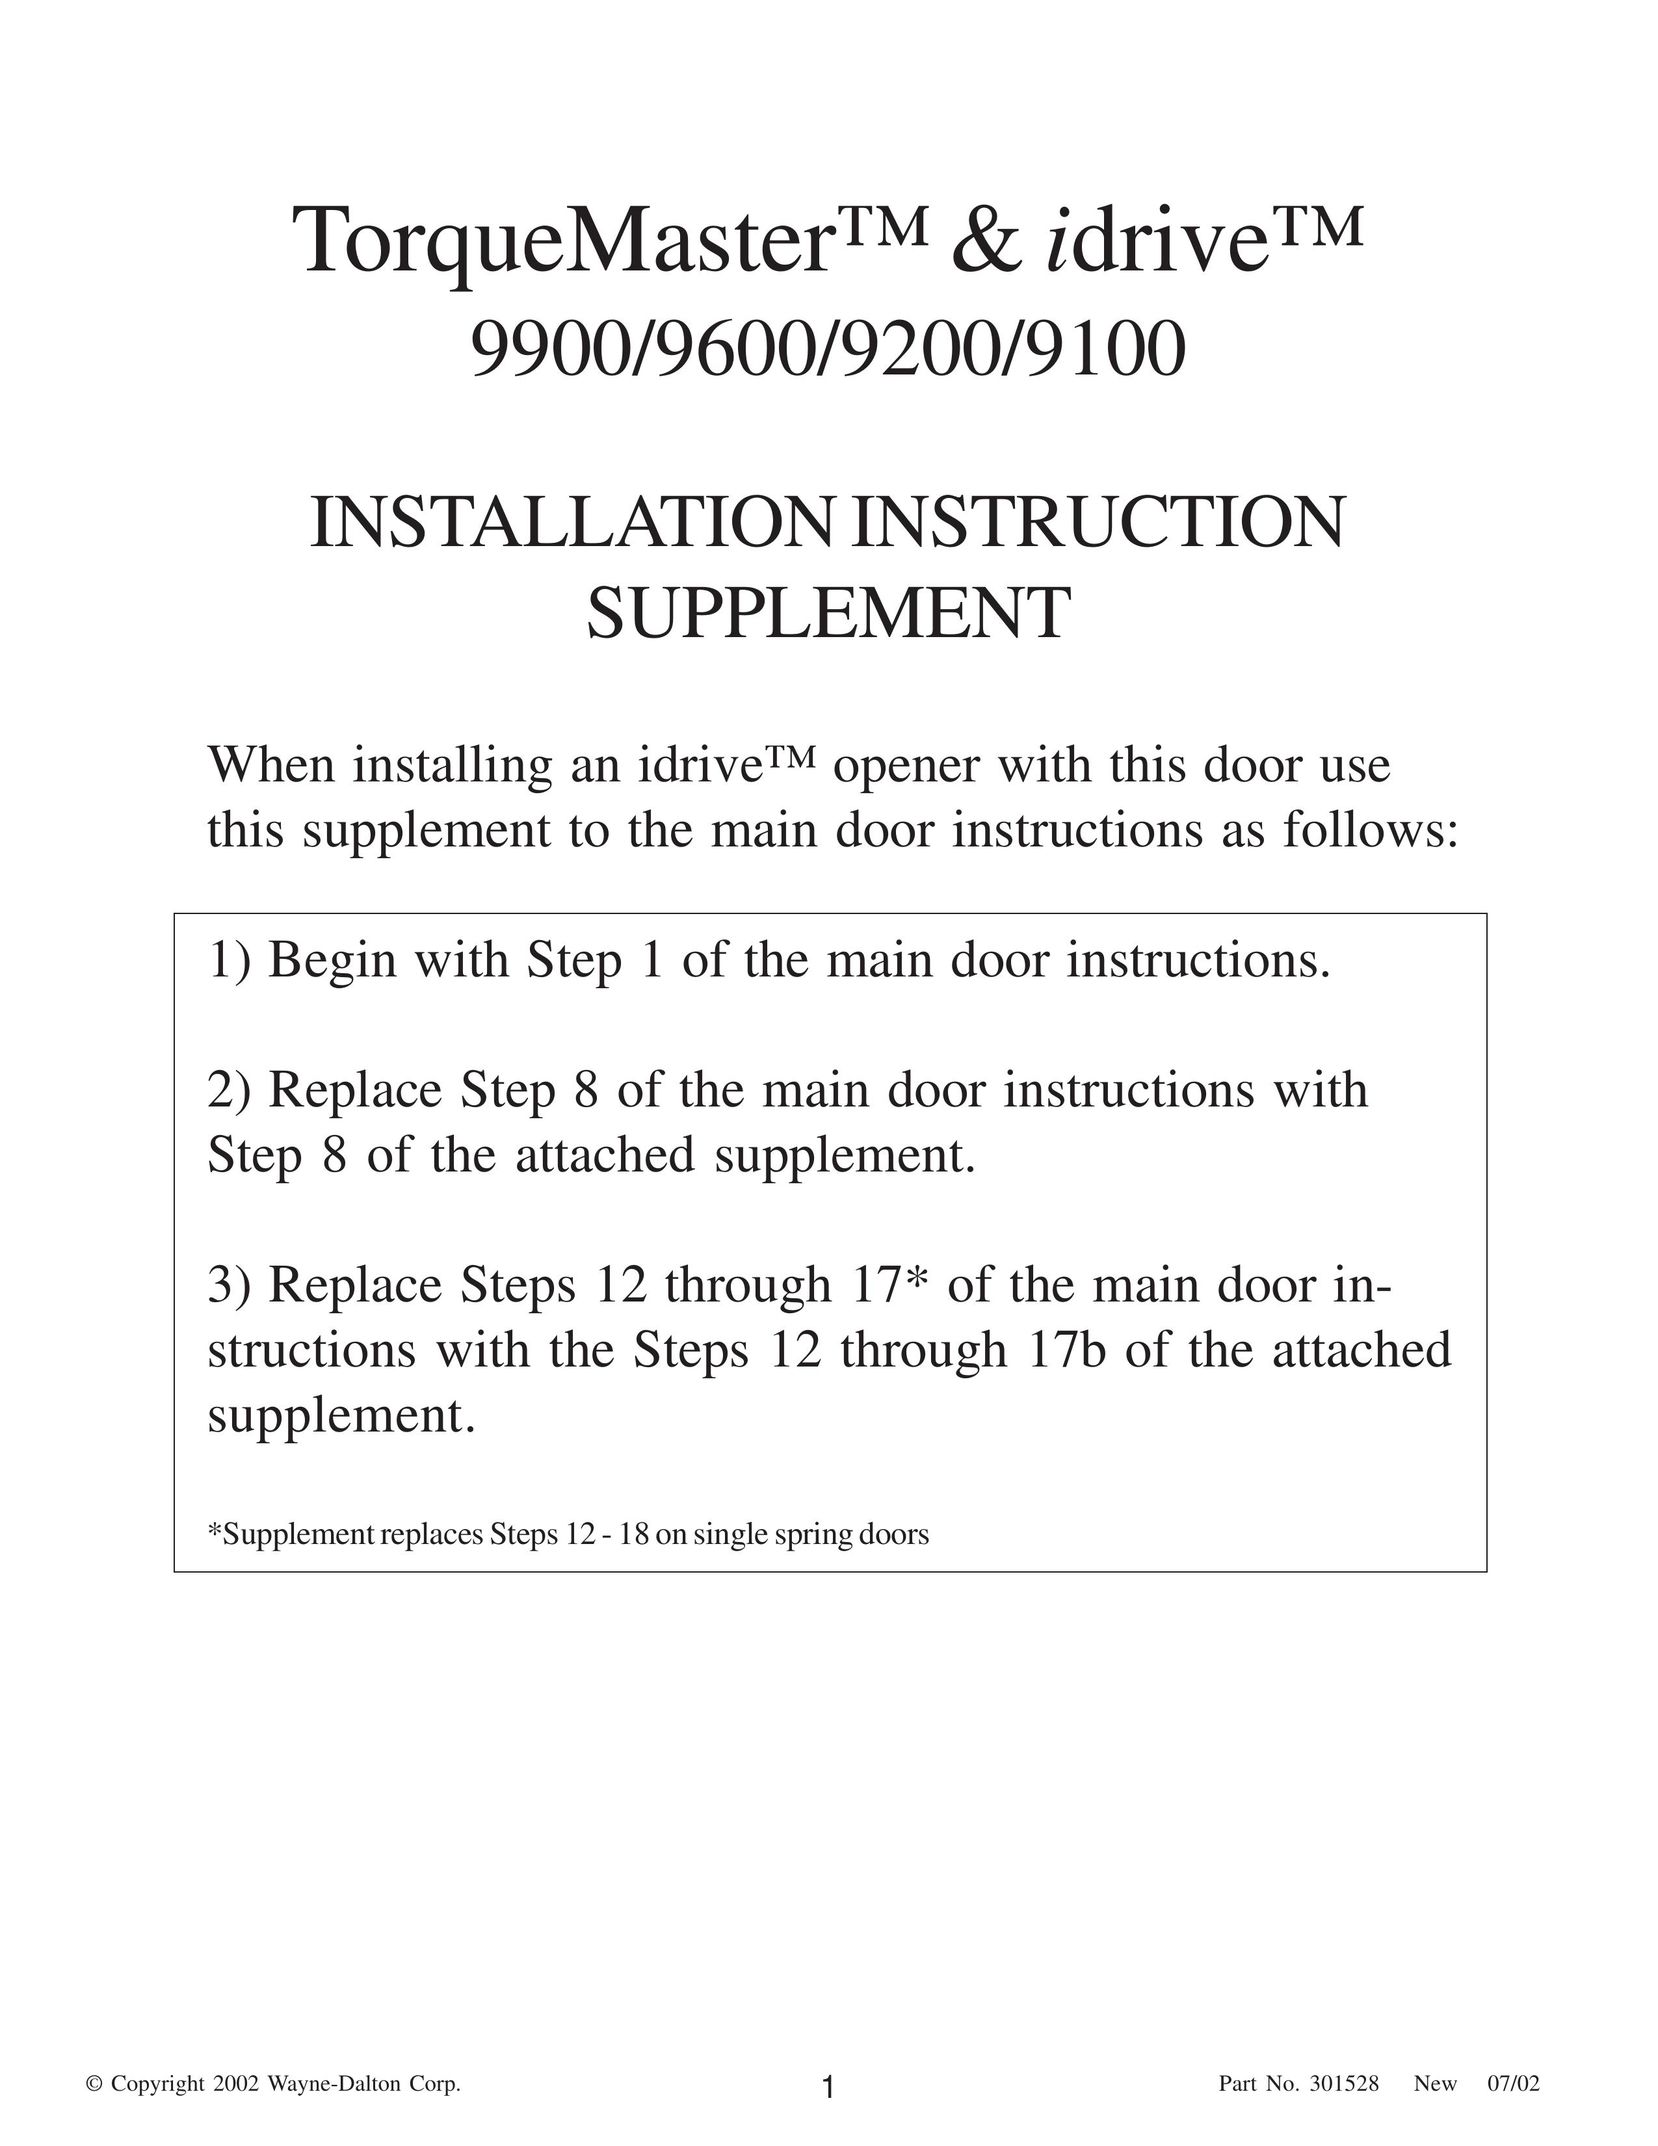 Wayne-Dalton 9600 Door User Manual